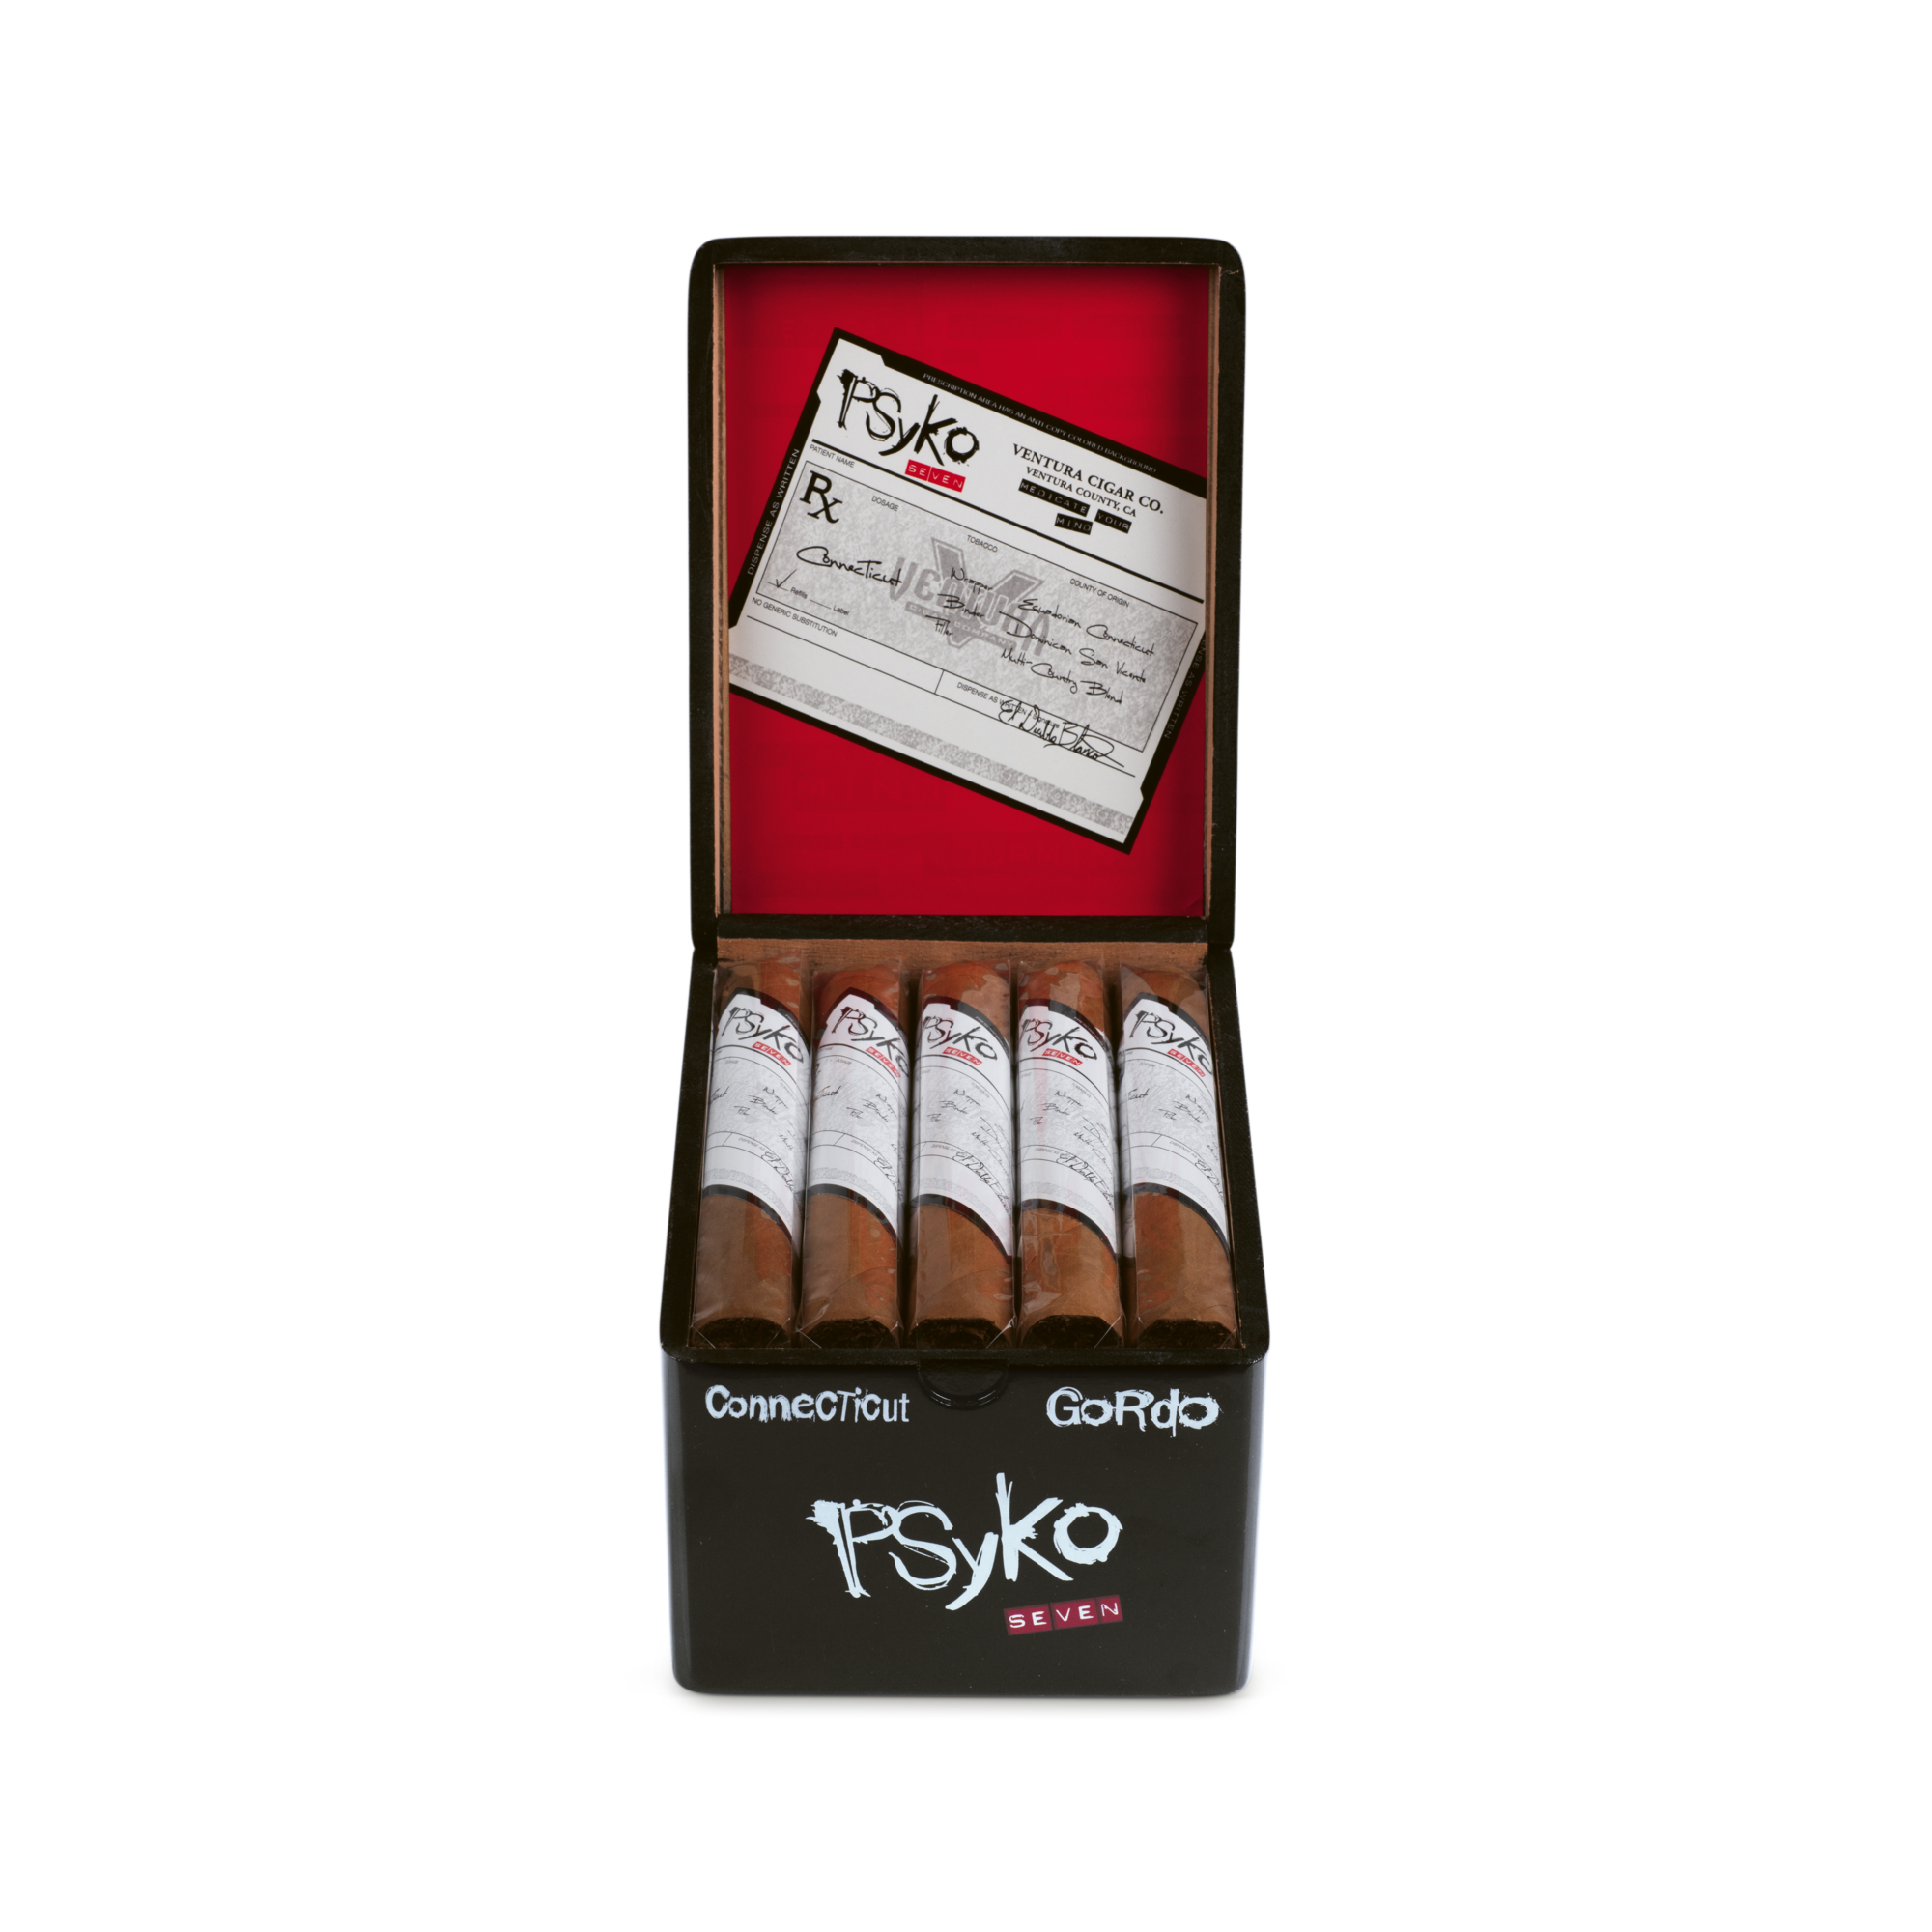 Psyko SEVEN Connecticut Gordo Zigarren Box geöffnet